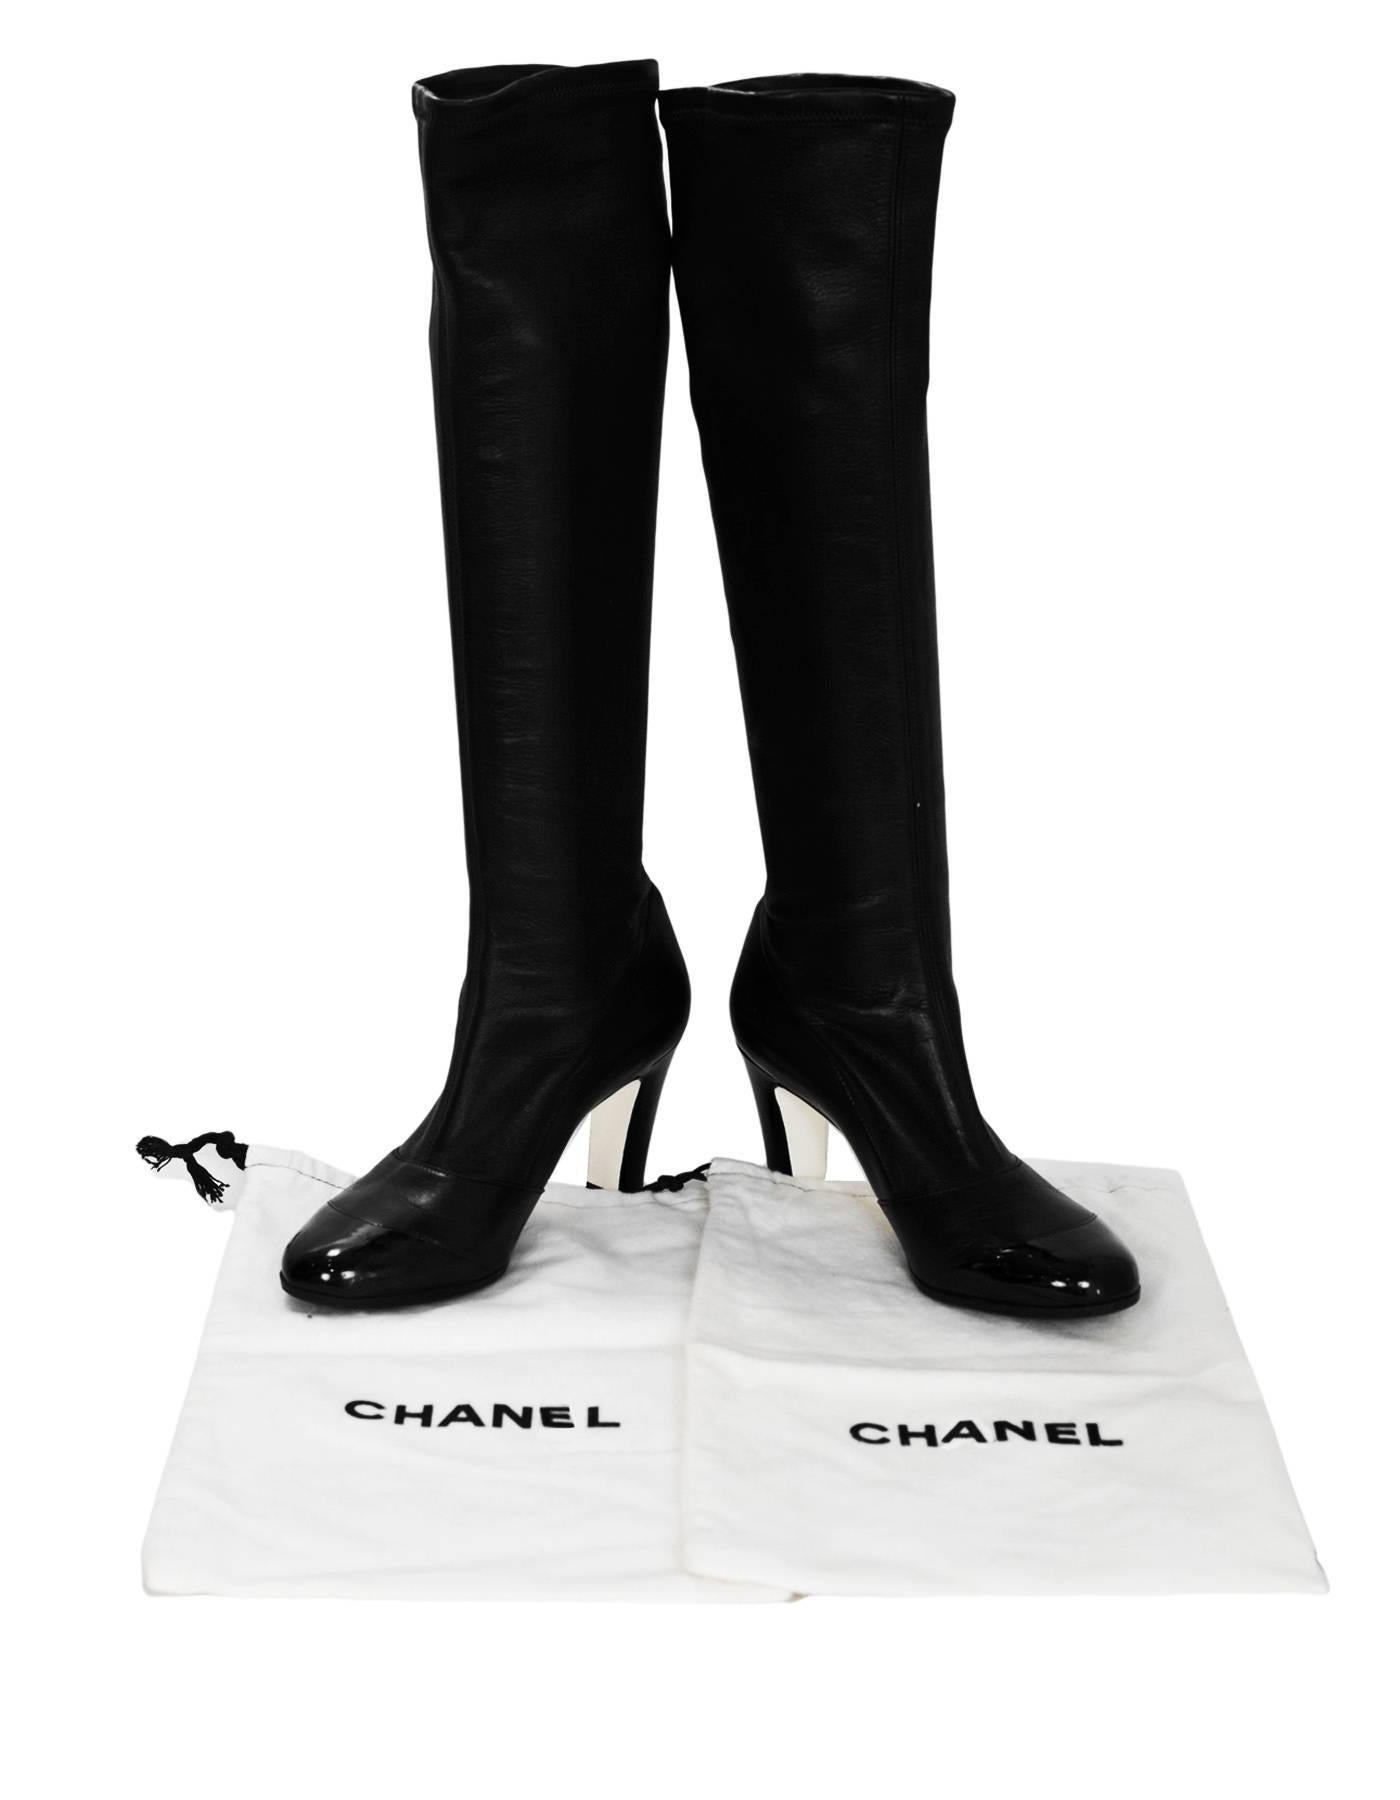 Chanel Black Leather & Patent Cap-Toe Boots Sz 38 2